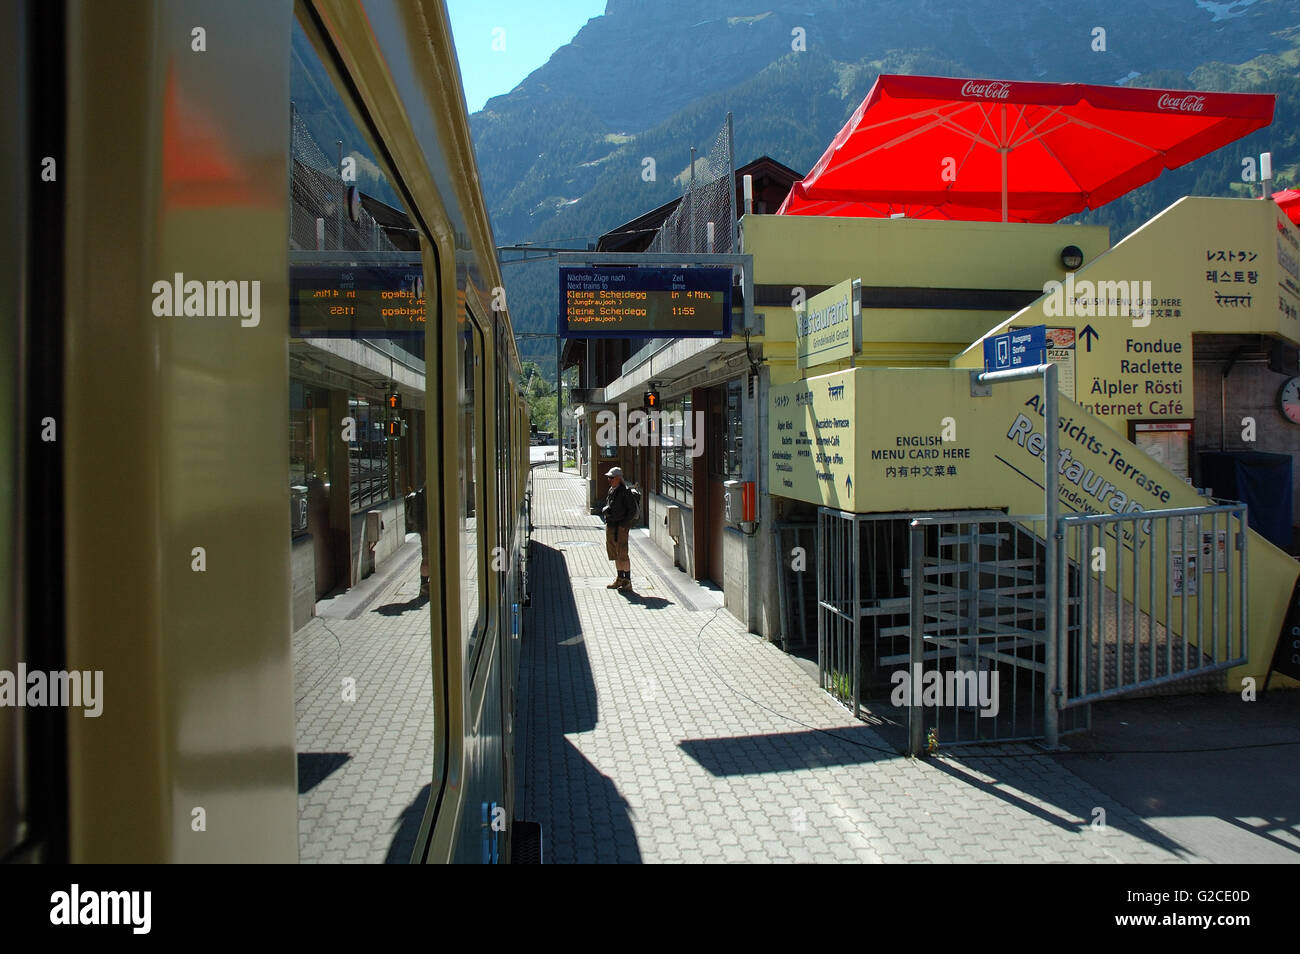 Grindelwald, Switzerland - August 18, 2014: Platform on railway station in Grindelwald in Switzerland. Unidentified man visible. Stock Photo